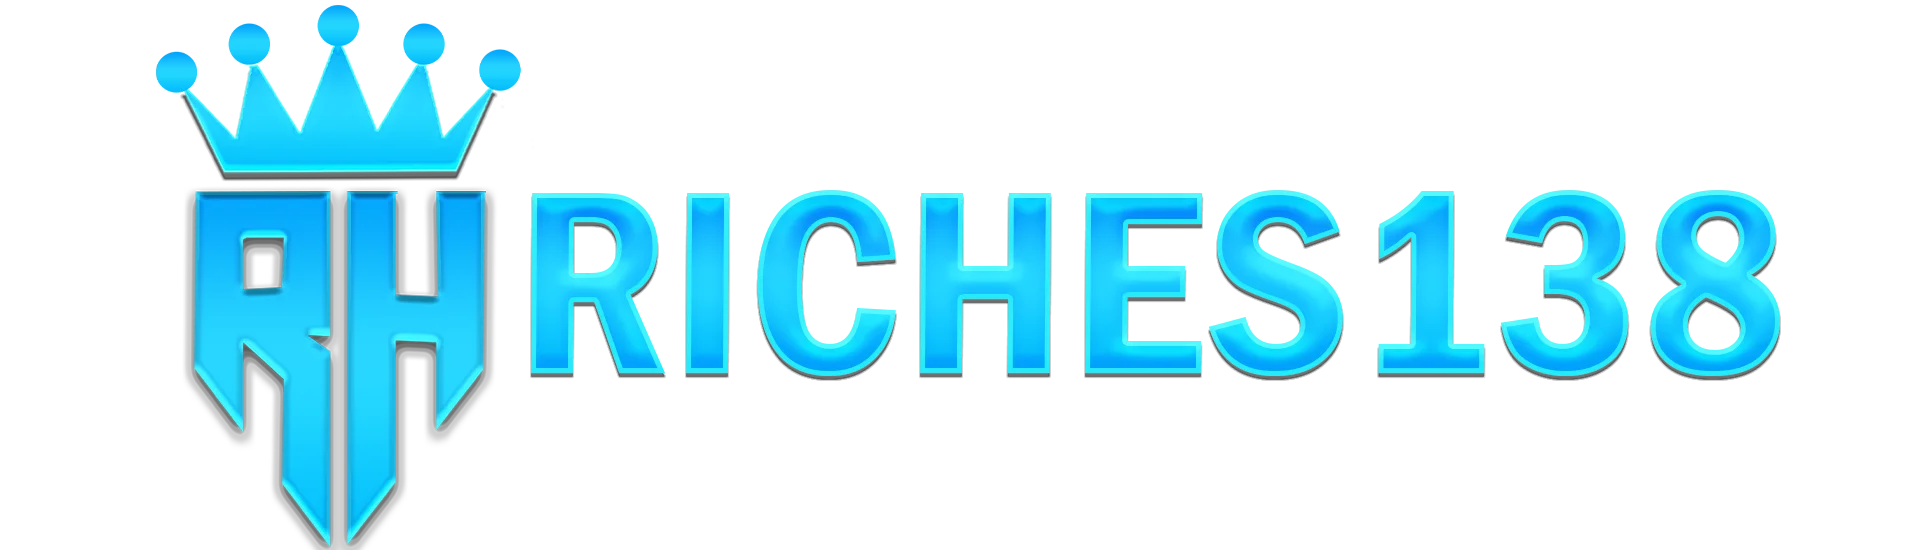 riches138.pro